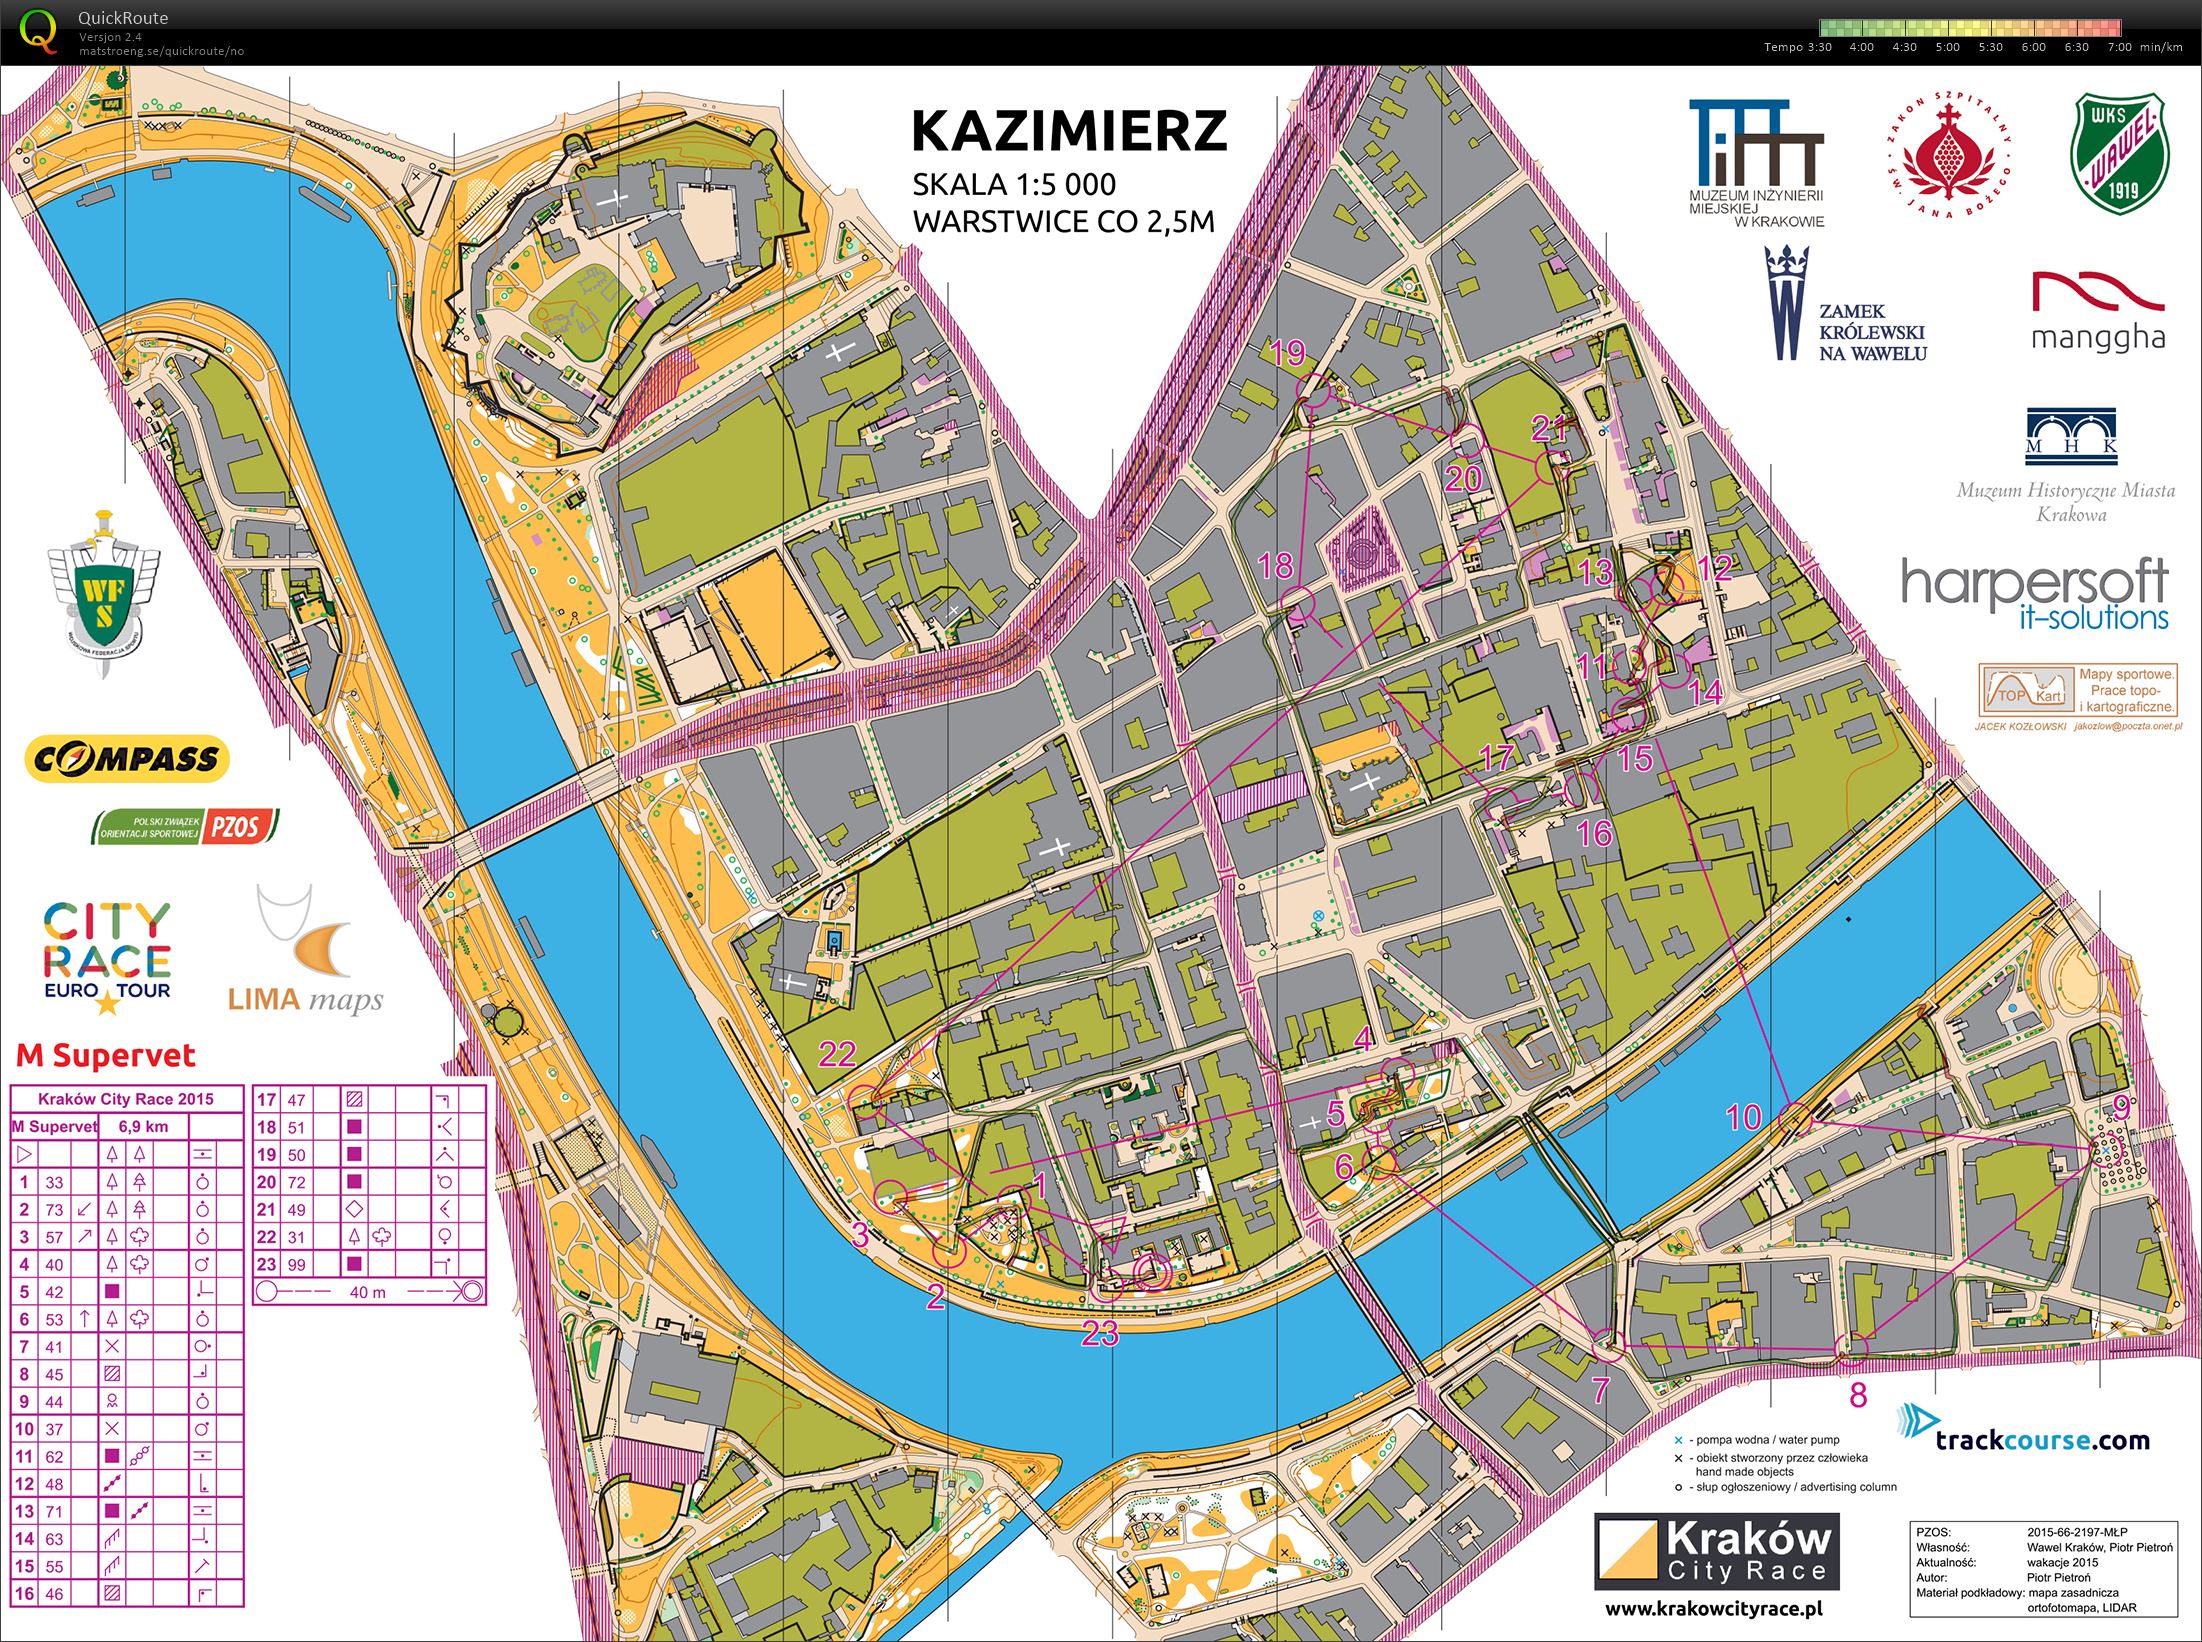 Krakow city race (11.10.2015)